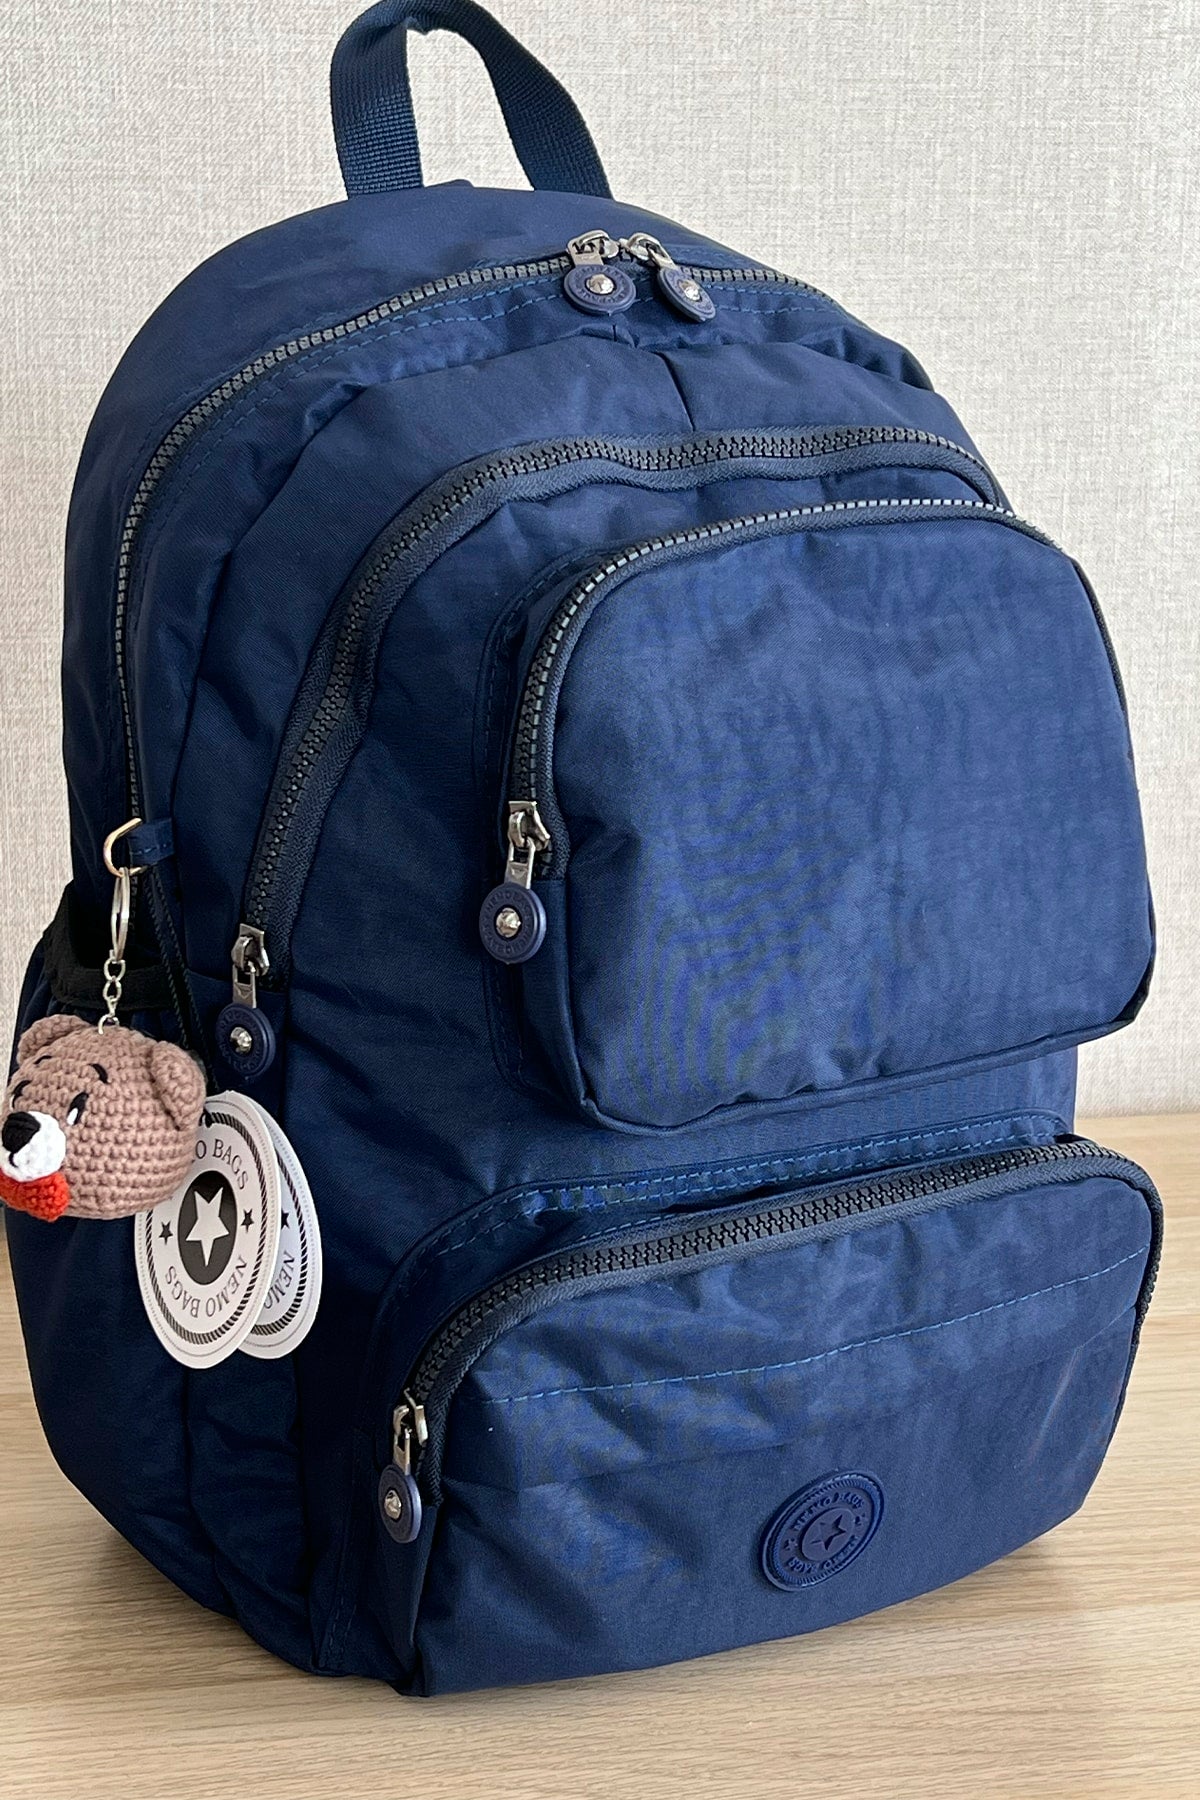 Dark Navy Blue Backpack School Bag 14 Inch Laptop Bag Duomino 18 lt 40 X 30 X 15 cm